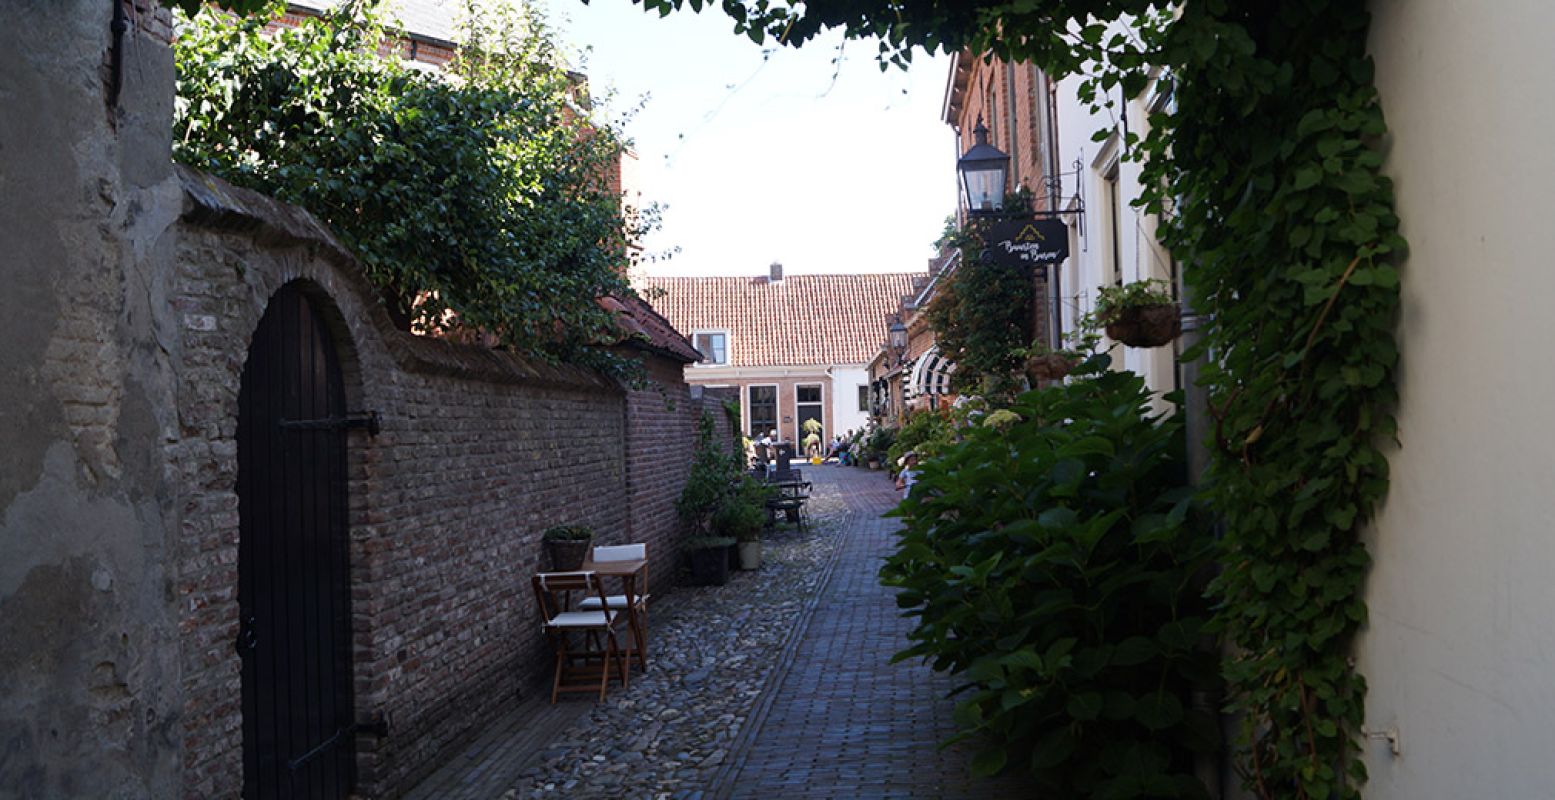 Zoveel historie in zo'n klein stadje. Op bezoek in Buren! Foto: DagjeWeg.NL / Grytsje Anna Pietersma